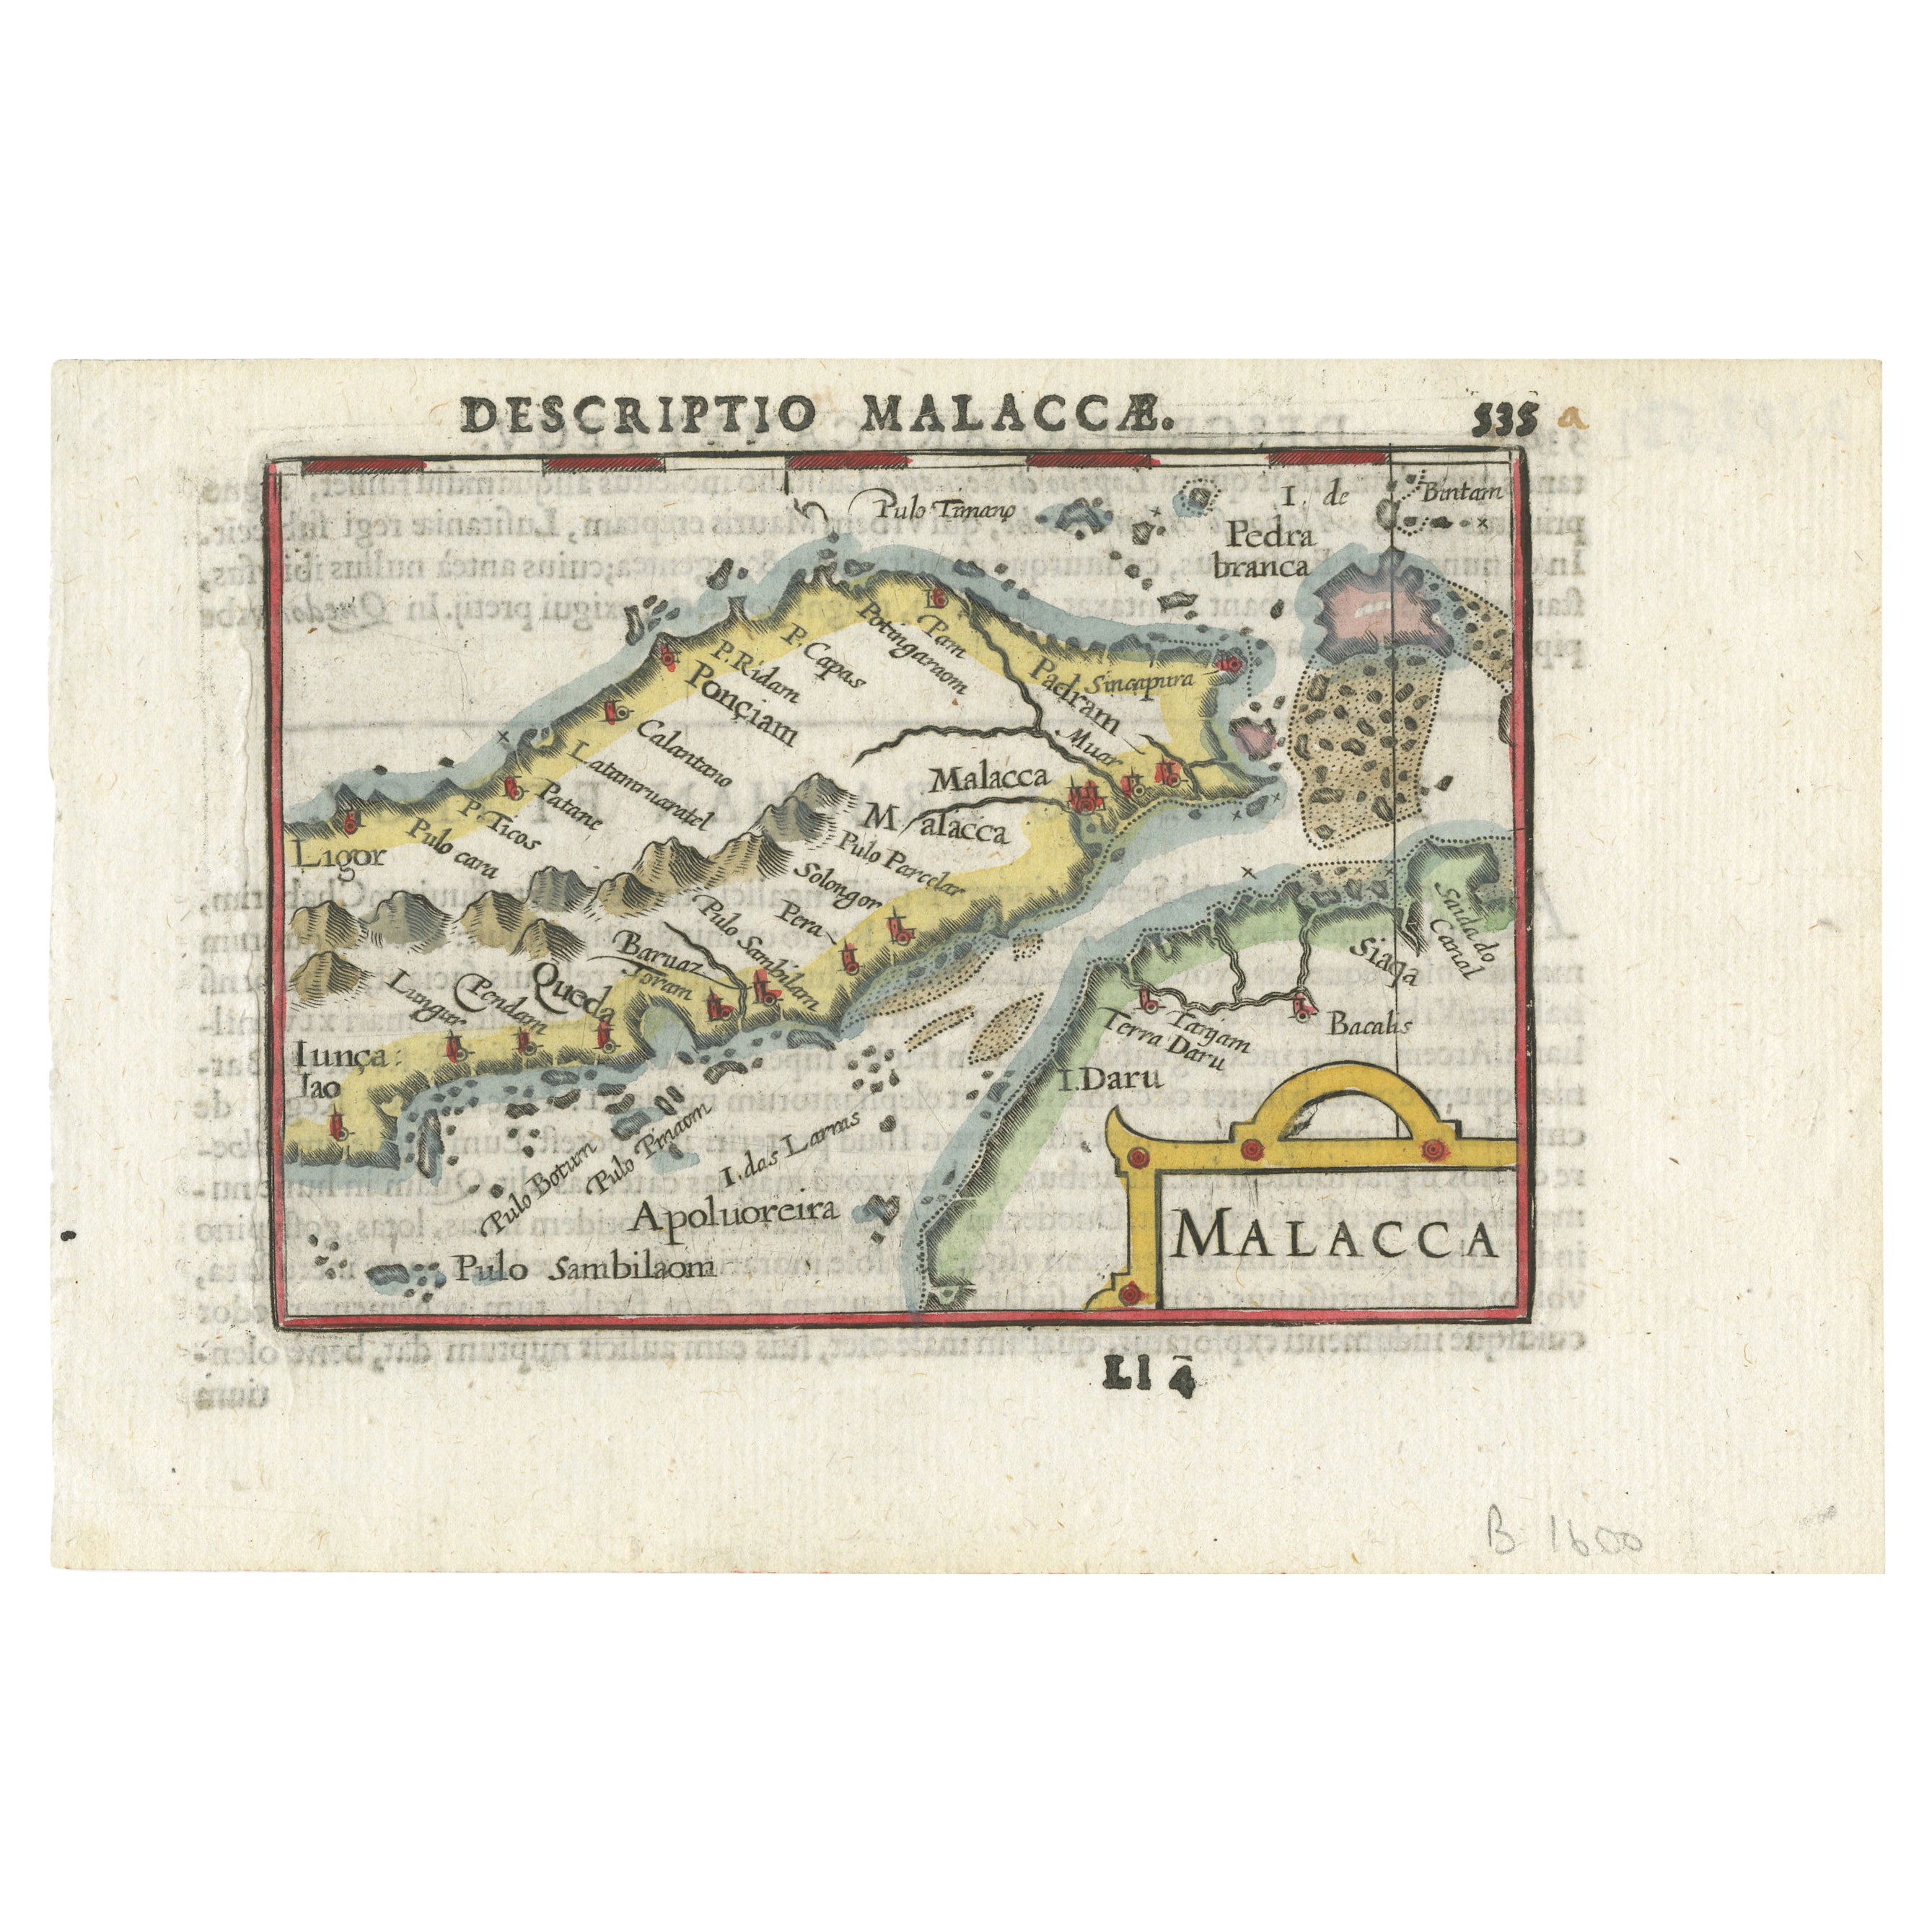 Rare Original Handcolored Miniature Map of Malaysia and Singapore, 1600 For Sale